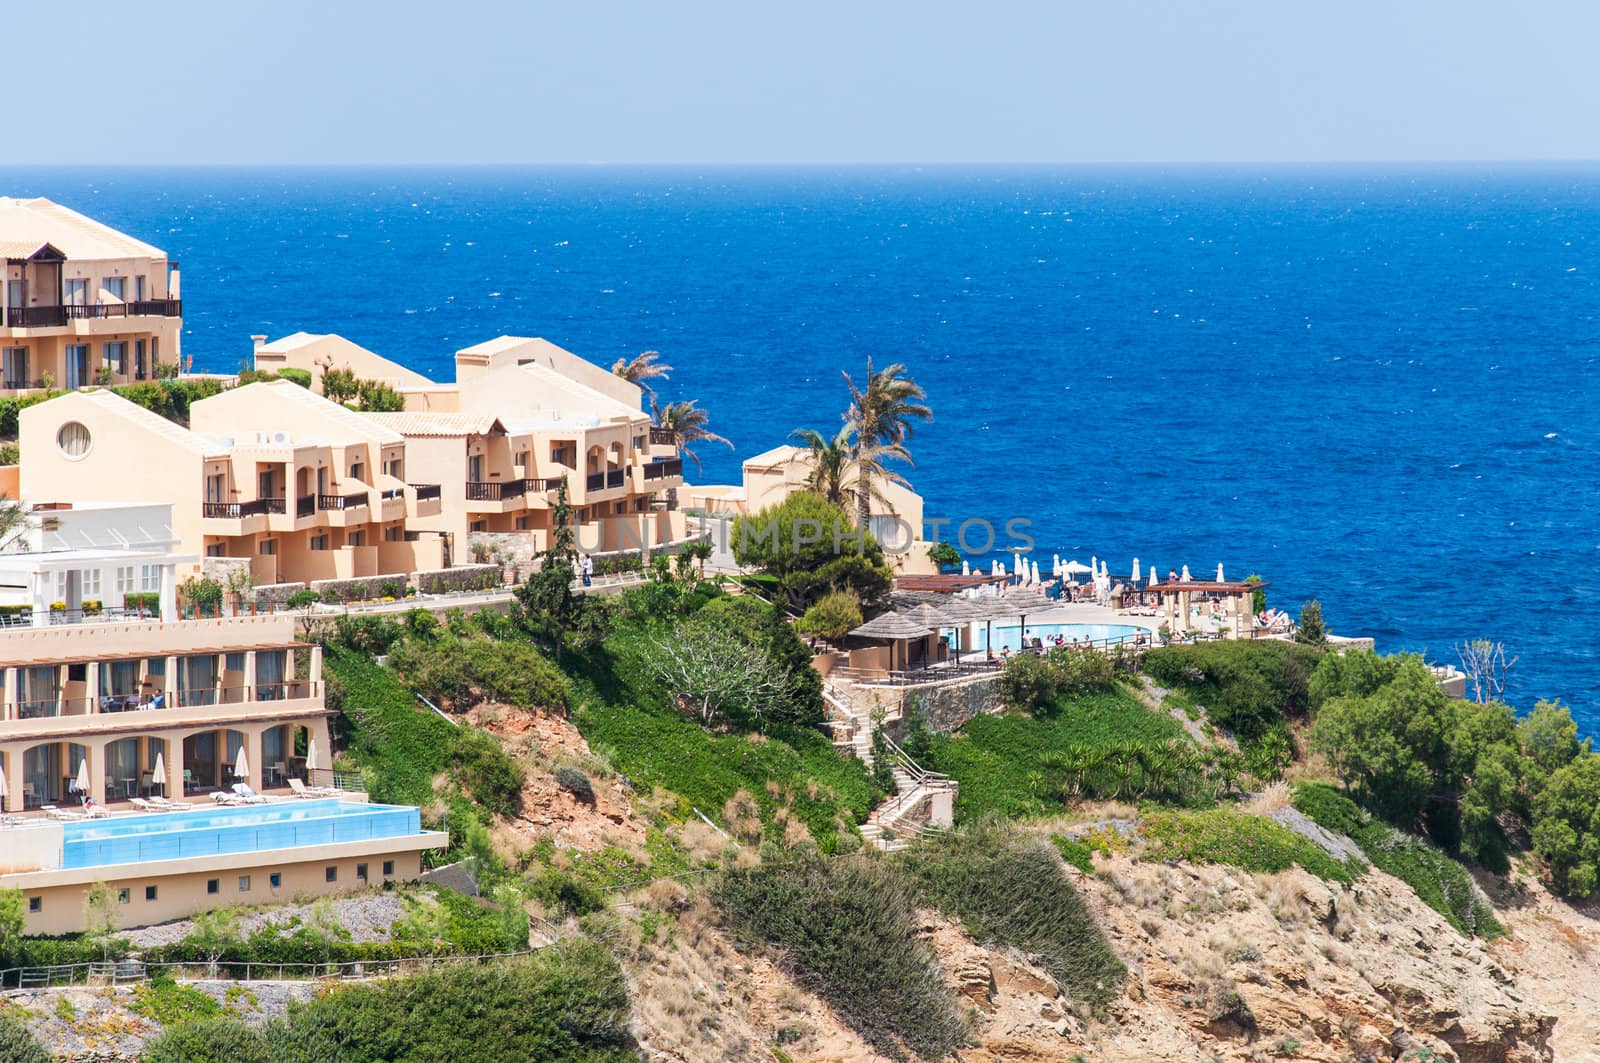 Crete resort by Nanisimova